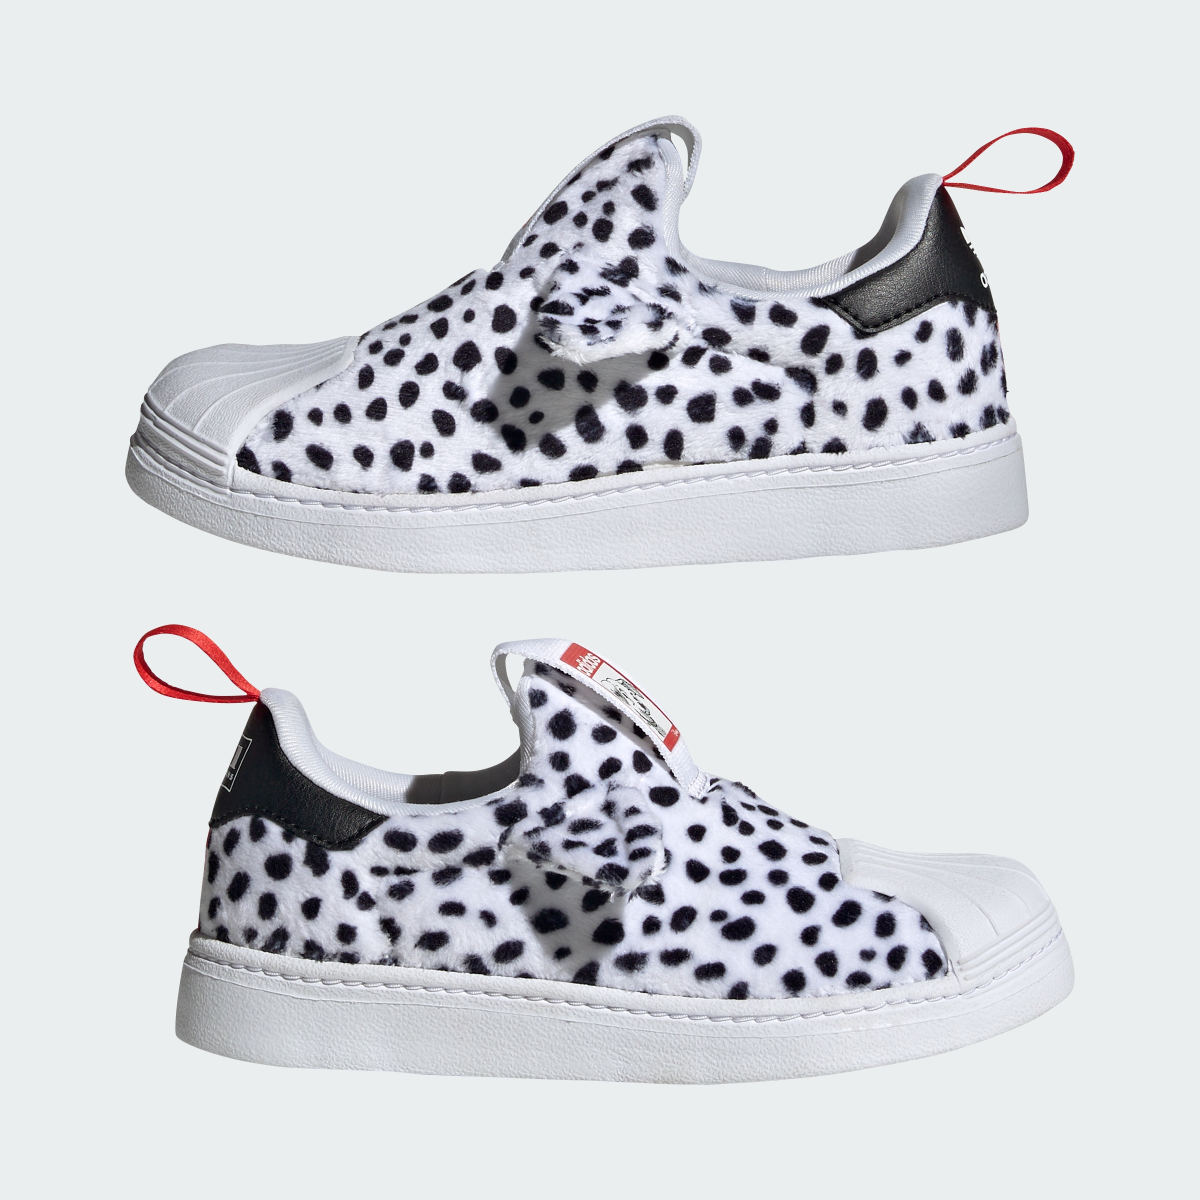 Adidas Scarpe adidas Originals x Disney 101 Dalmatians Superstar 360 Kids. 8